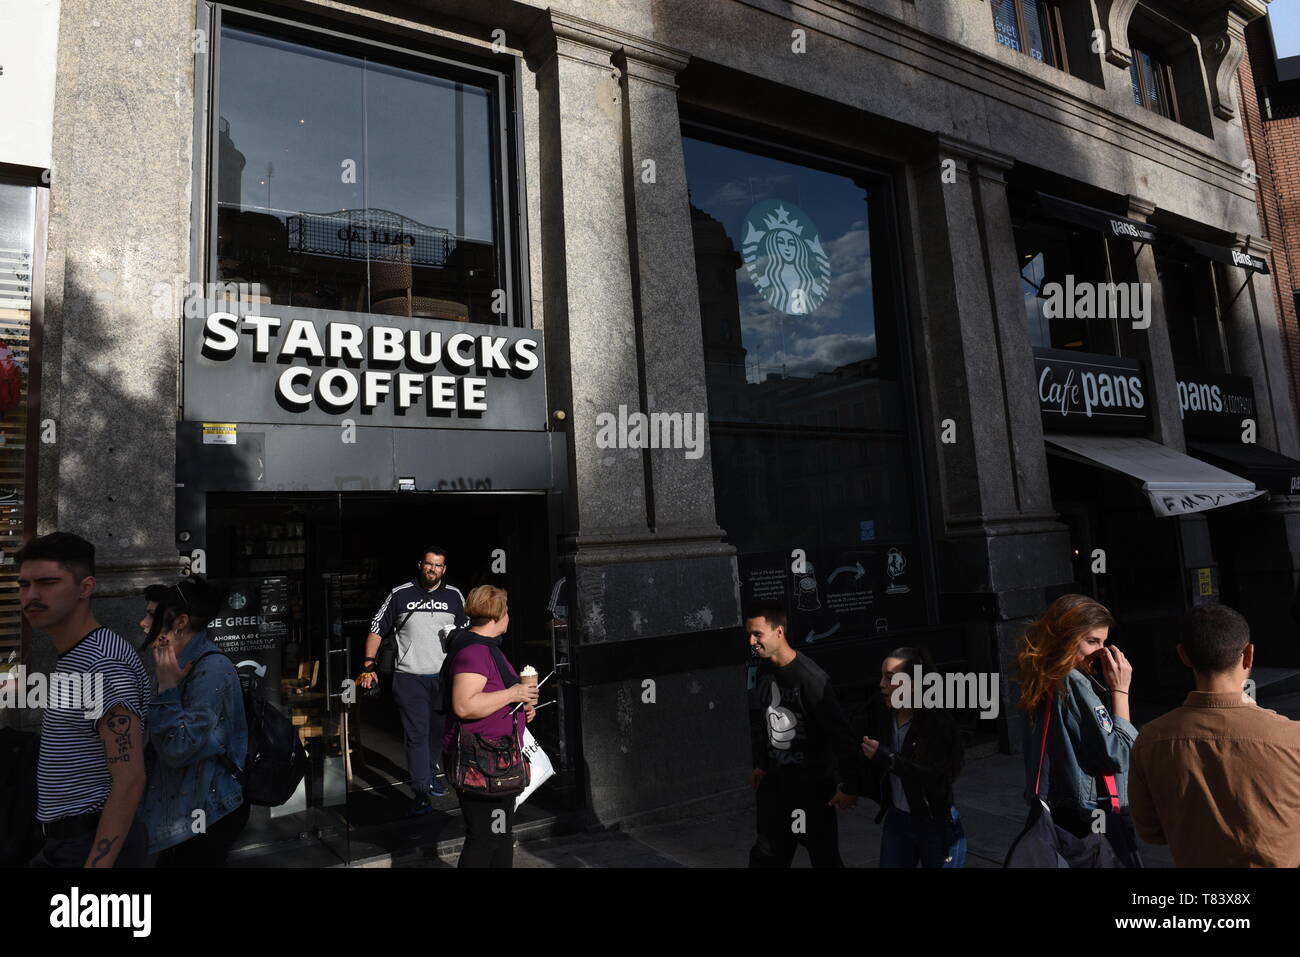 Starbucks Coffee shop seen at Callao square in Madrid. Stock Photo